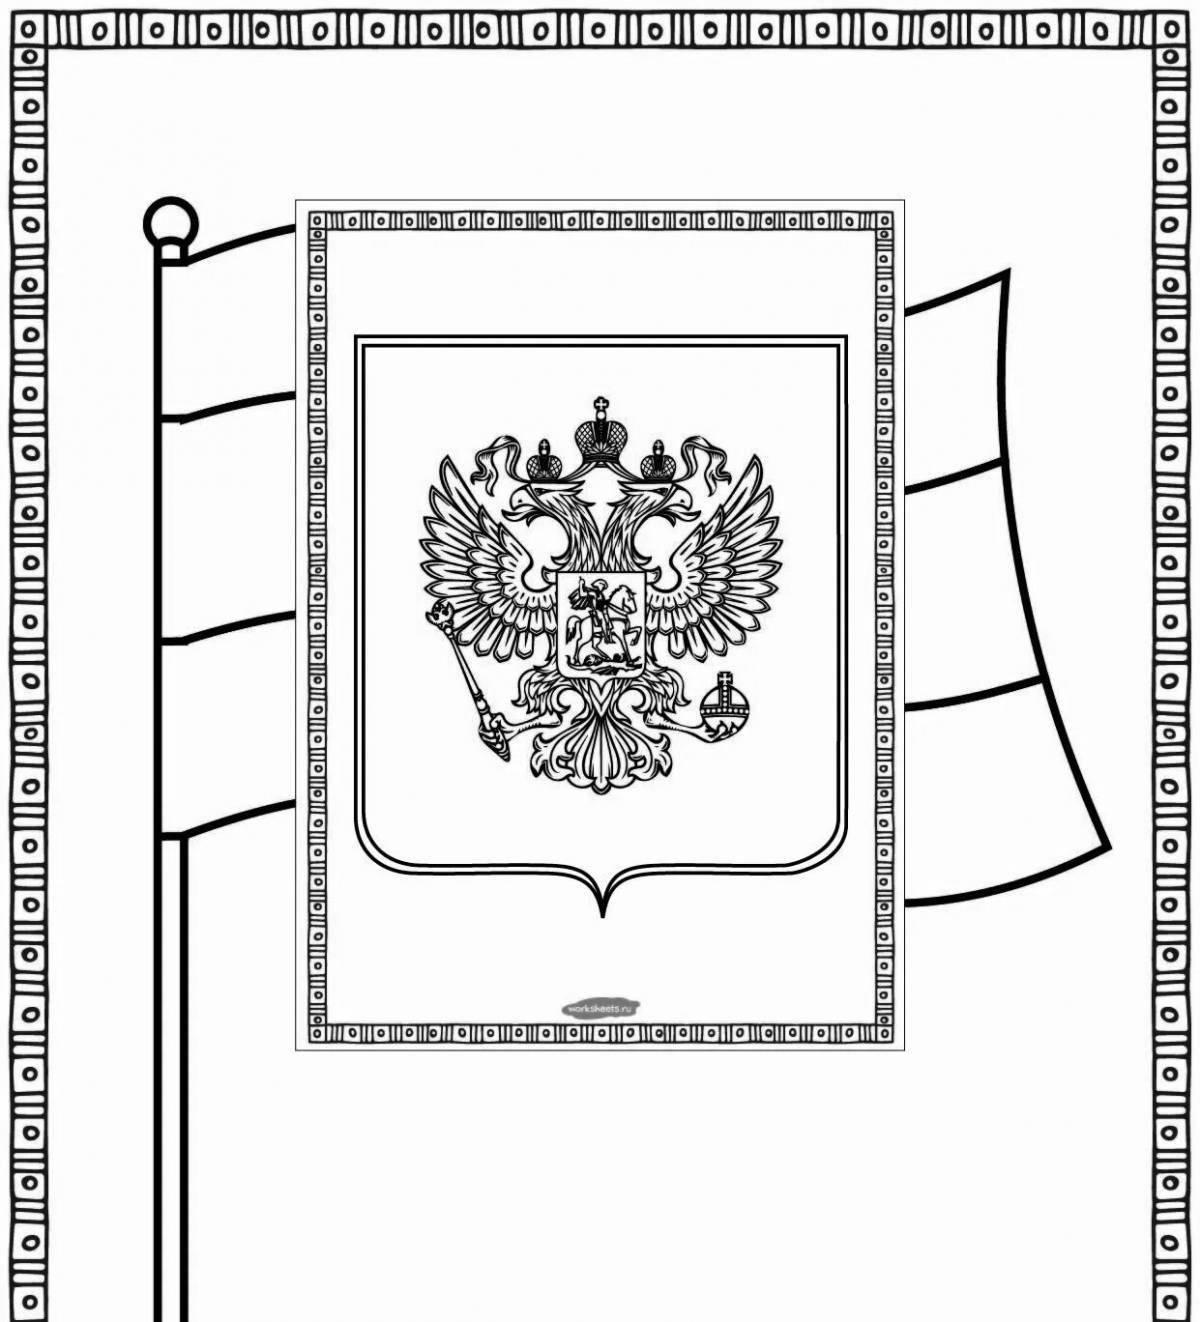 Brilliant coat of arms of Russia for preschoolers